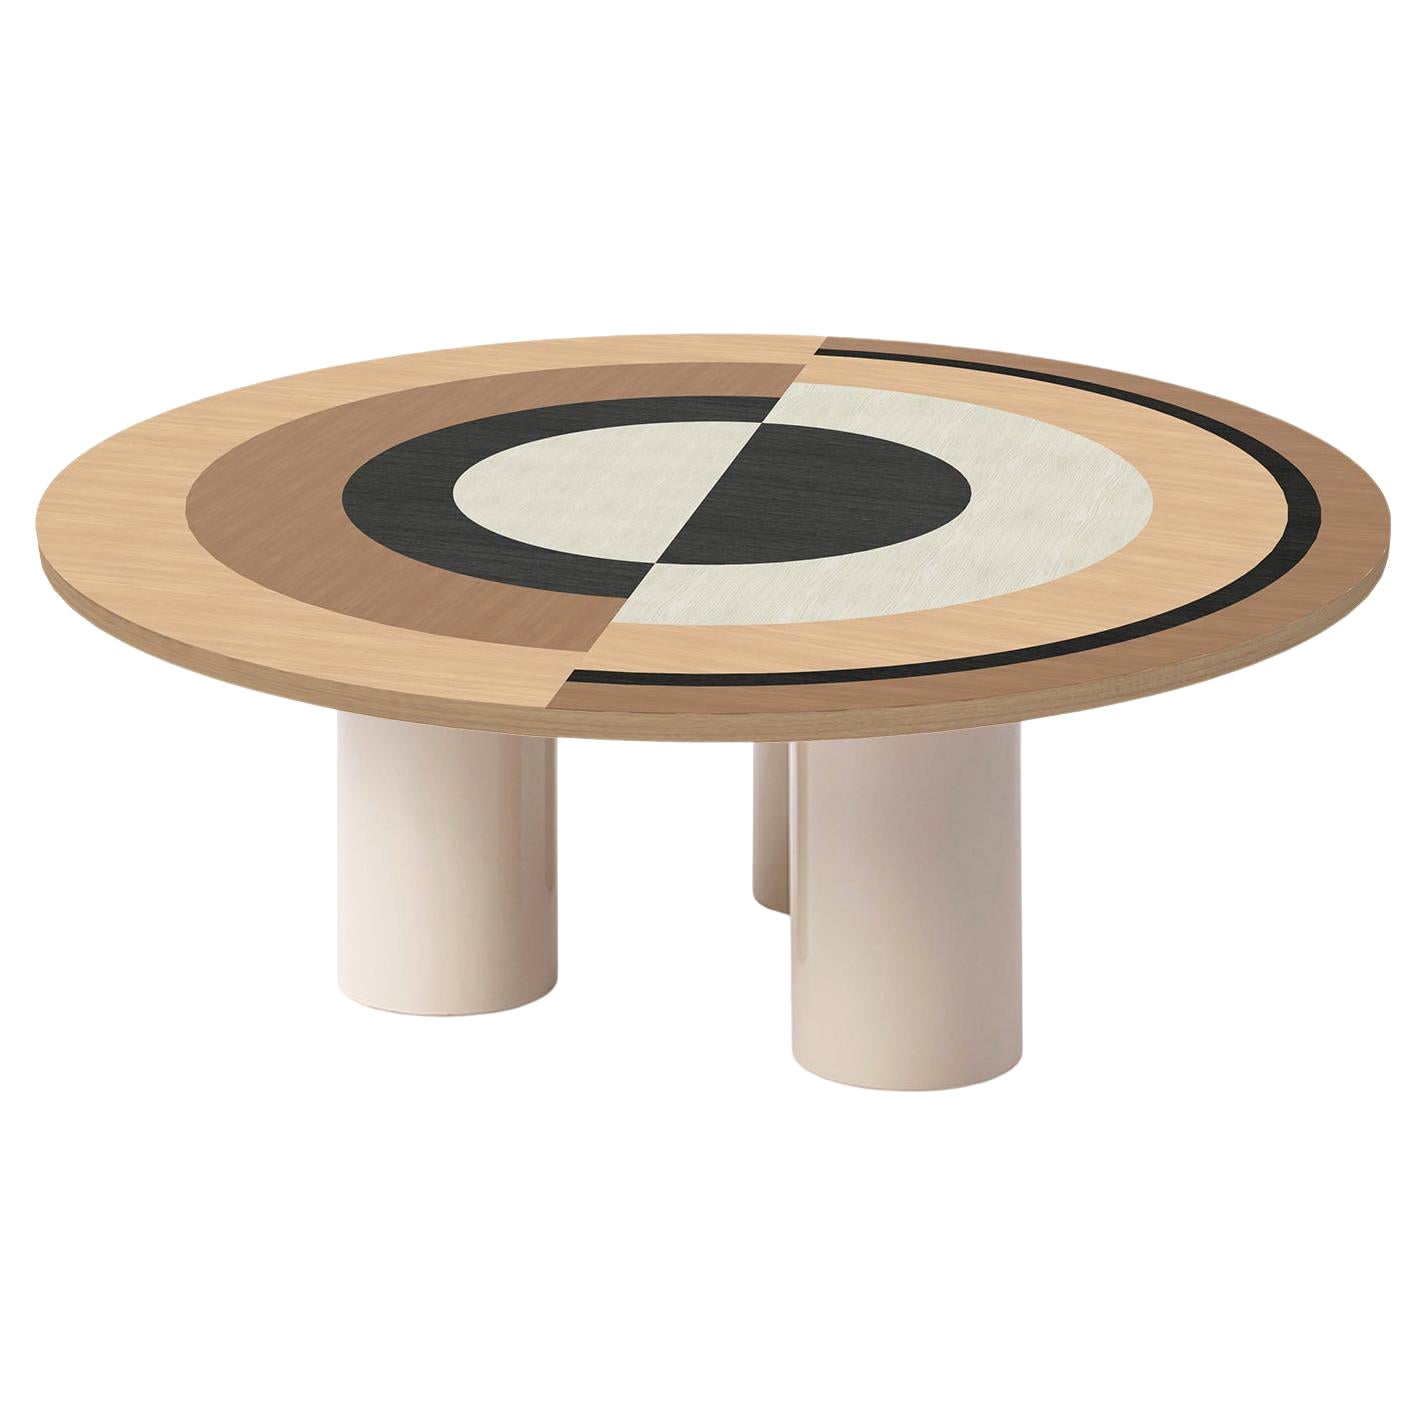 Table basse Sonia et Caetera M1 conçue par Thomas Dariel